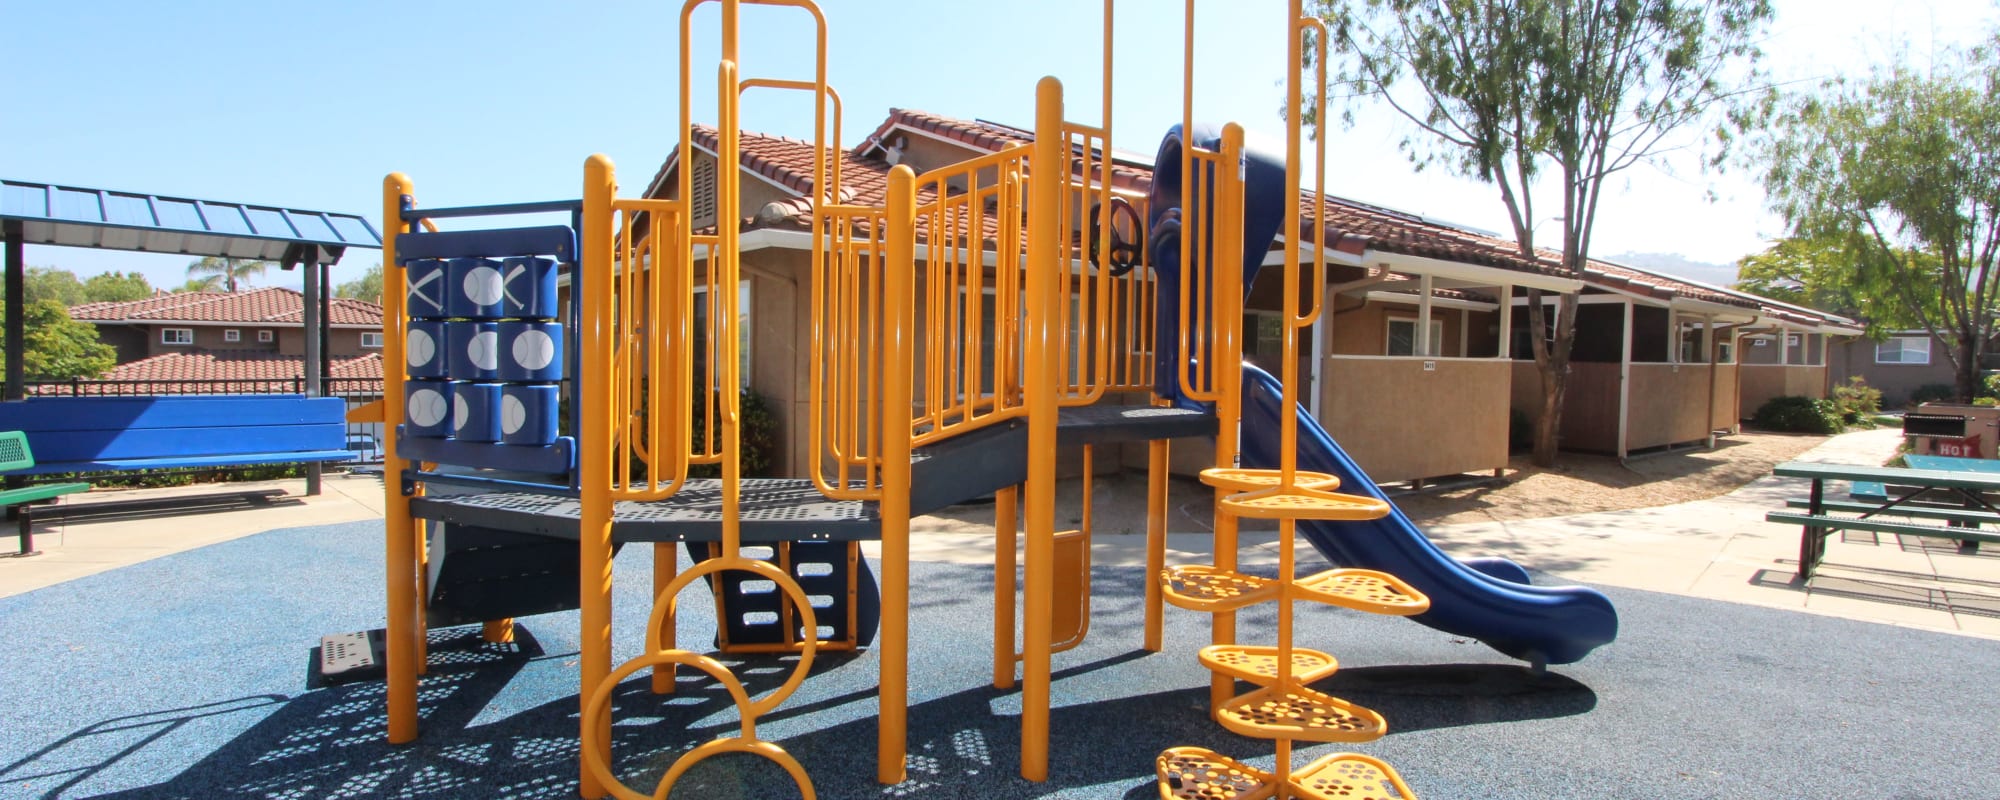 the playground at Mira Mesa Ridge in San Diego, California